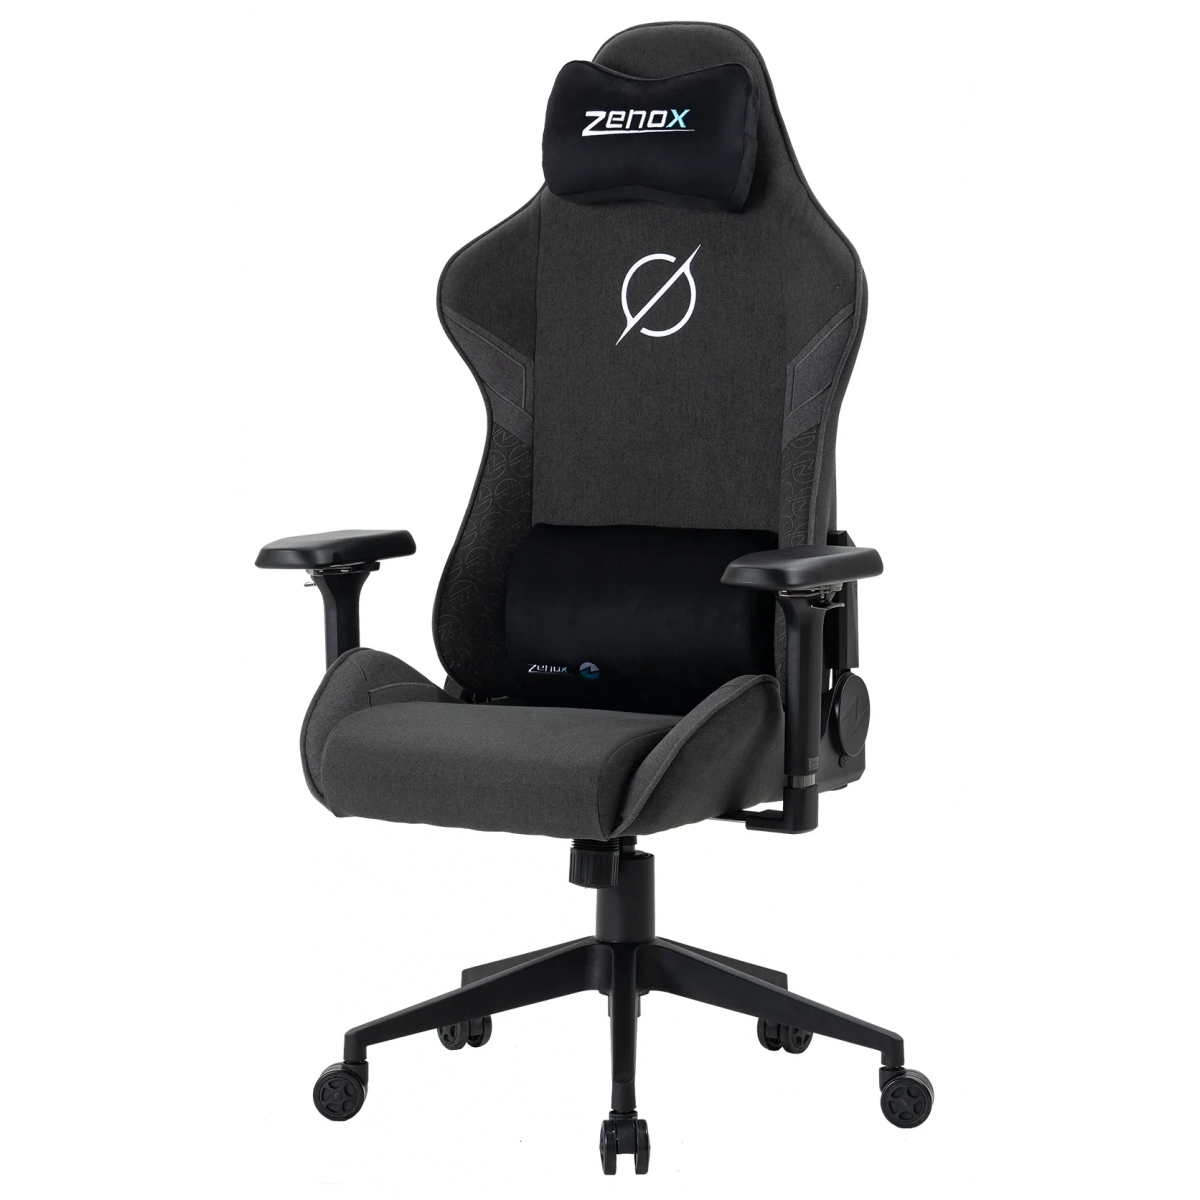 Zenox Saturn-MK2 Gaming Chair (Fabric/Charcoal)